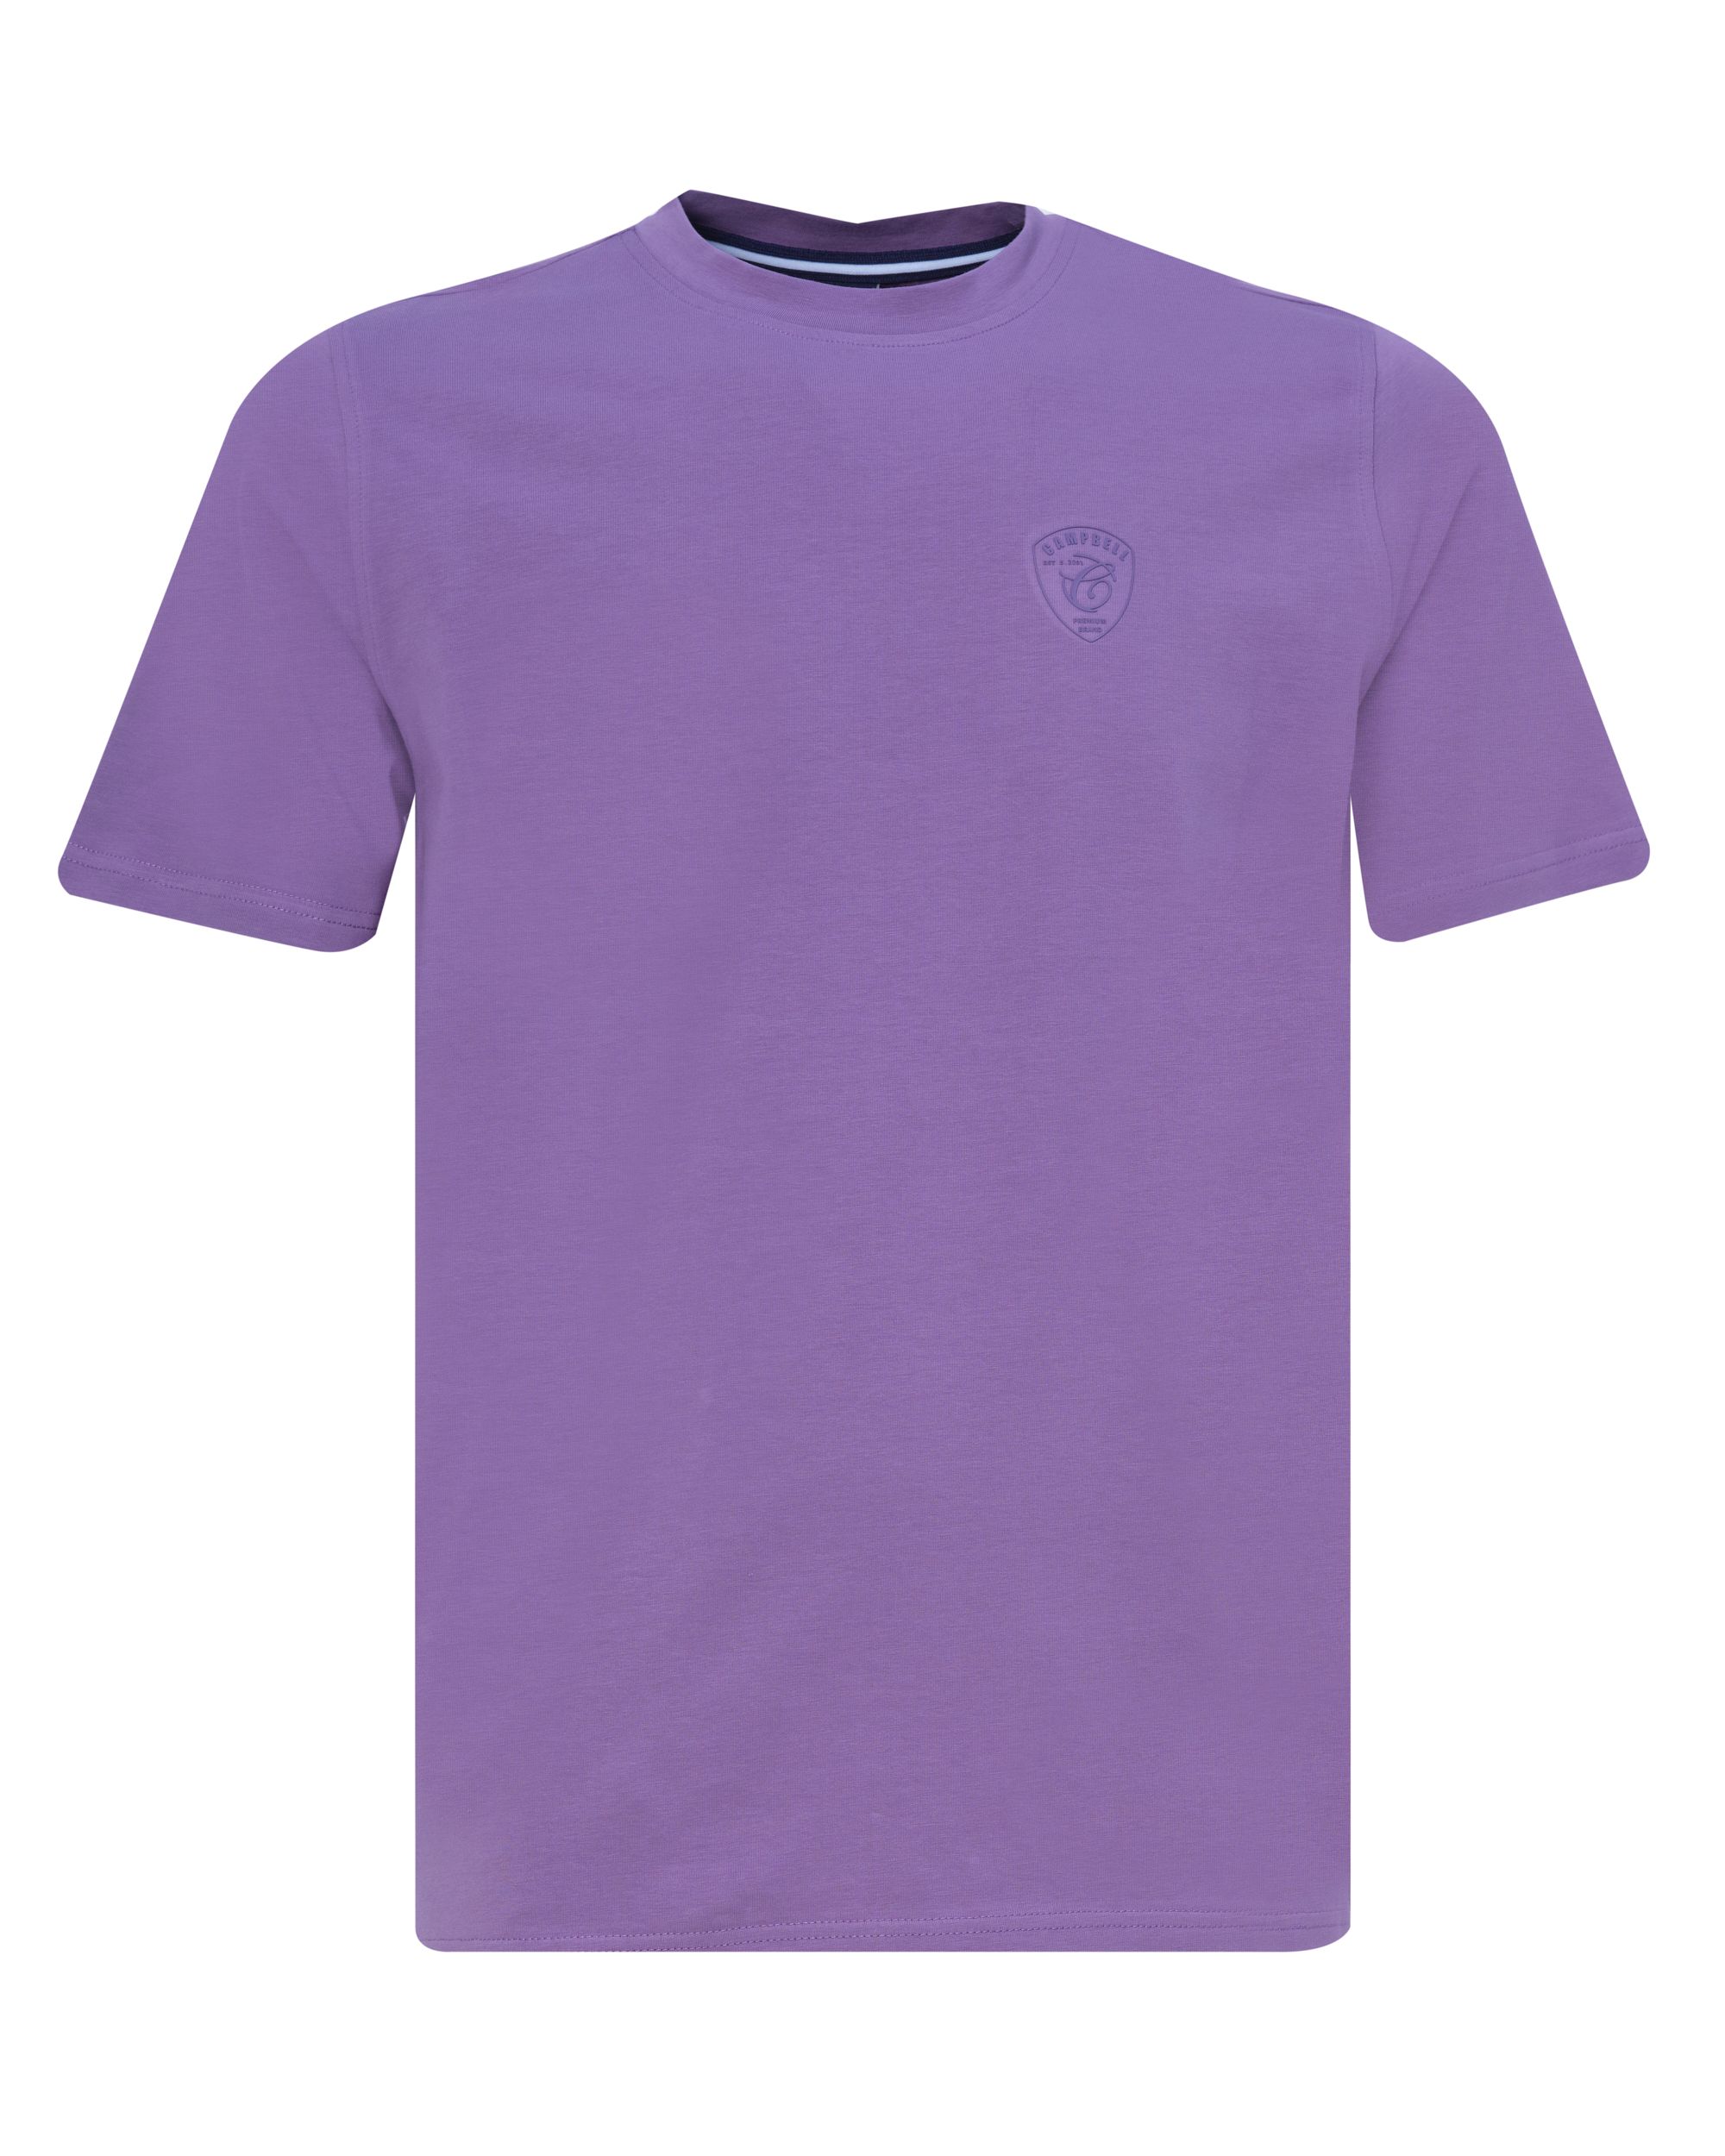 Campbell Classic T-shirt KM Grape Jam 084754-005-L